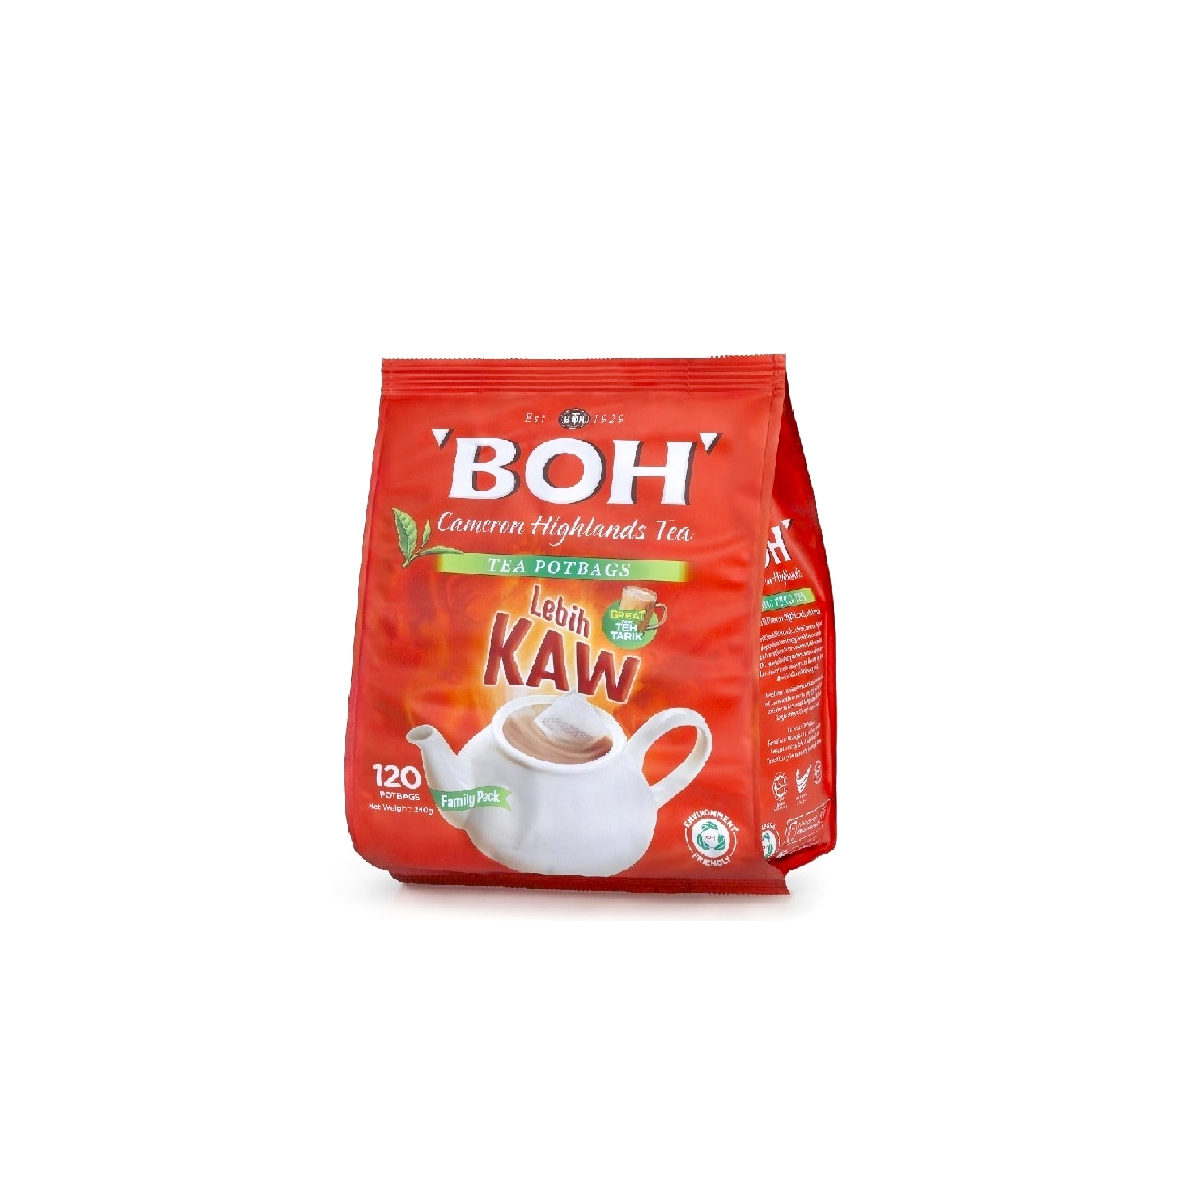 Boh Tea Potbags 120's